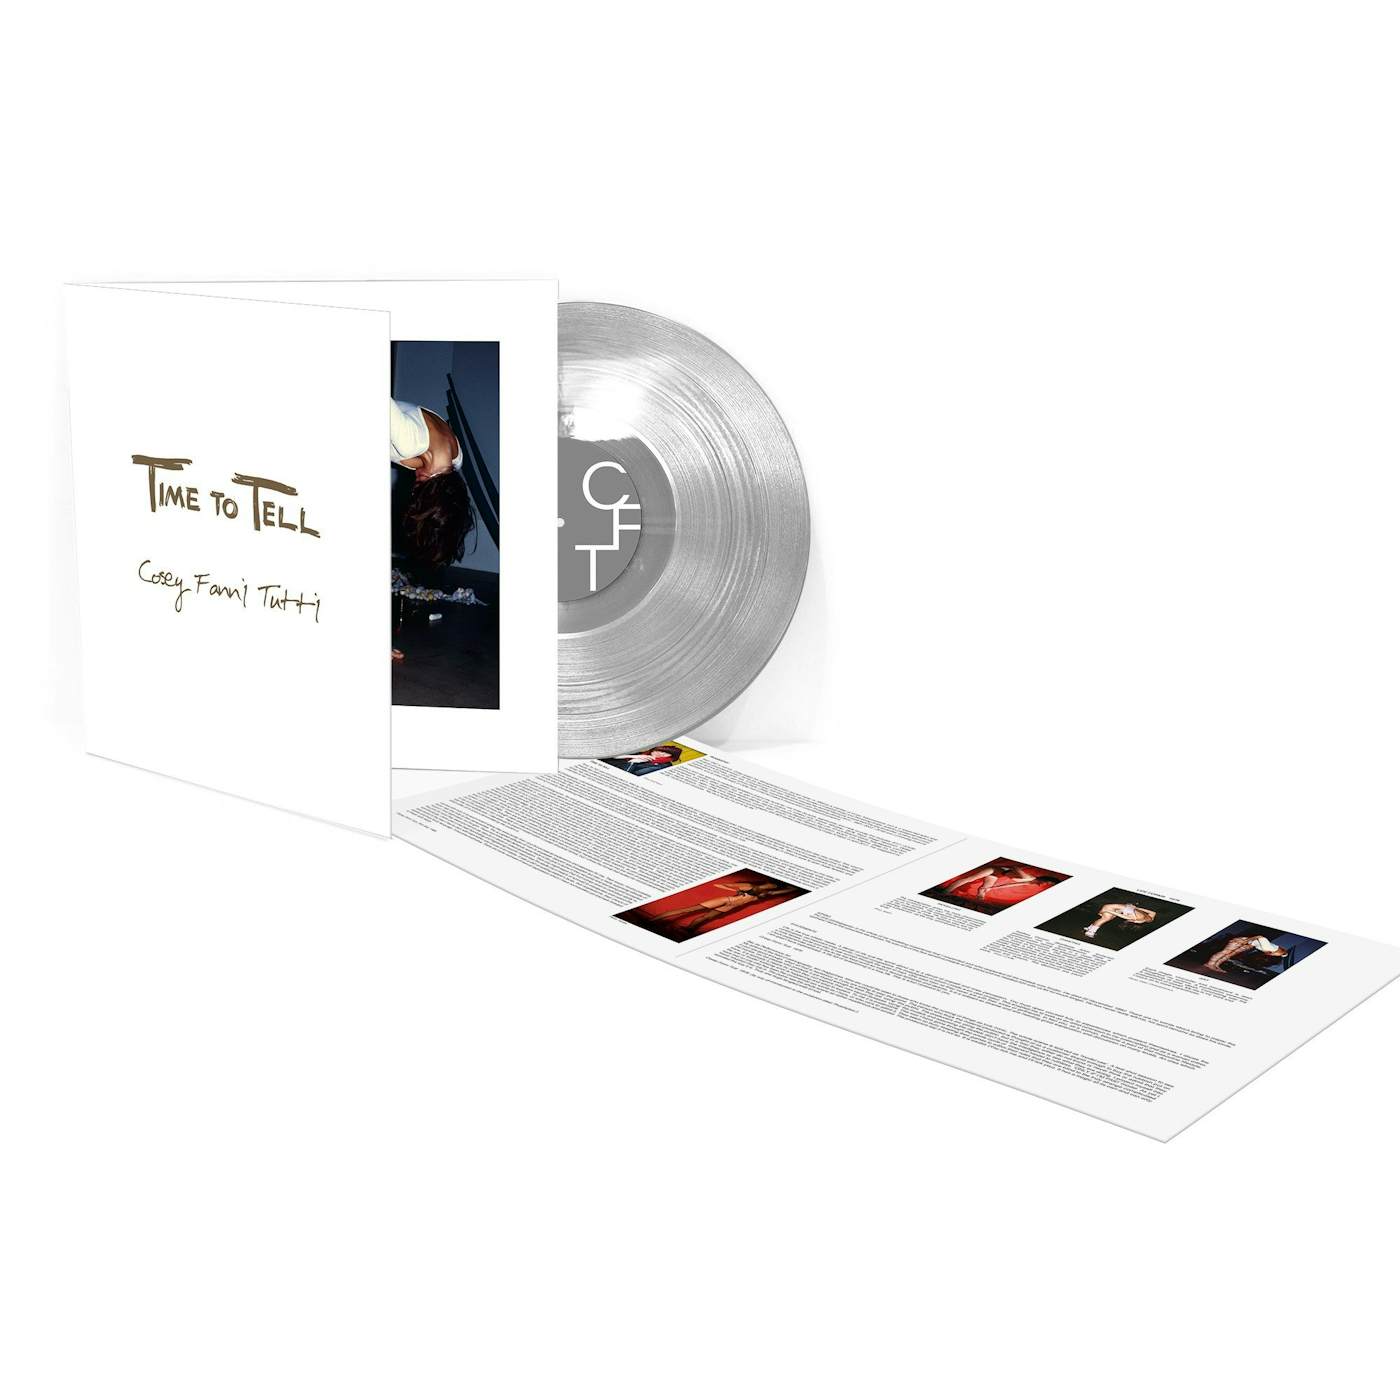 Cosey Fanni Tutti  'Time To Tell" Deluxe Vinyl edition Vinyl Record